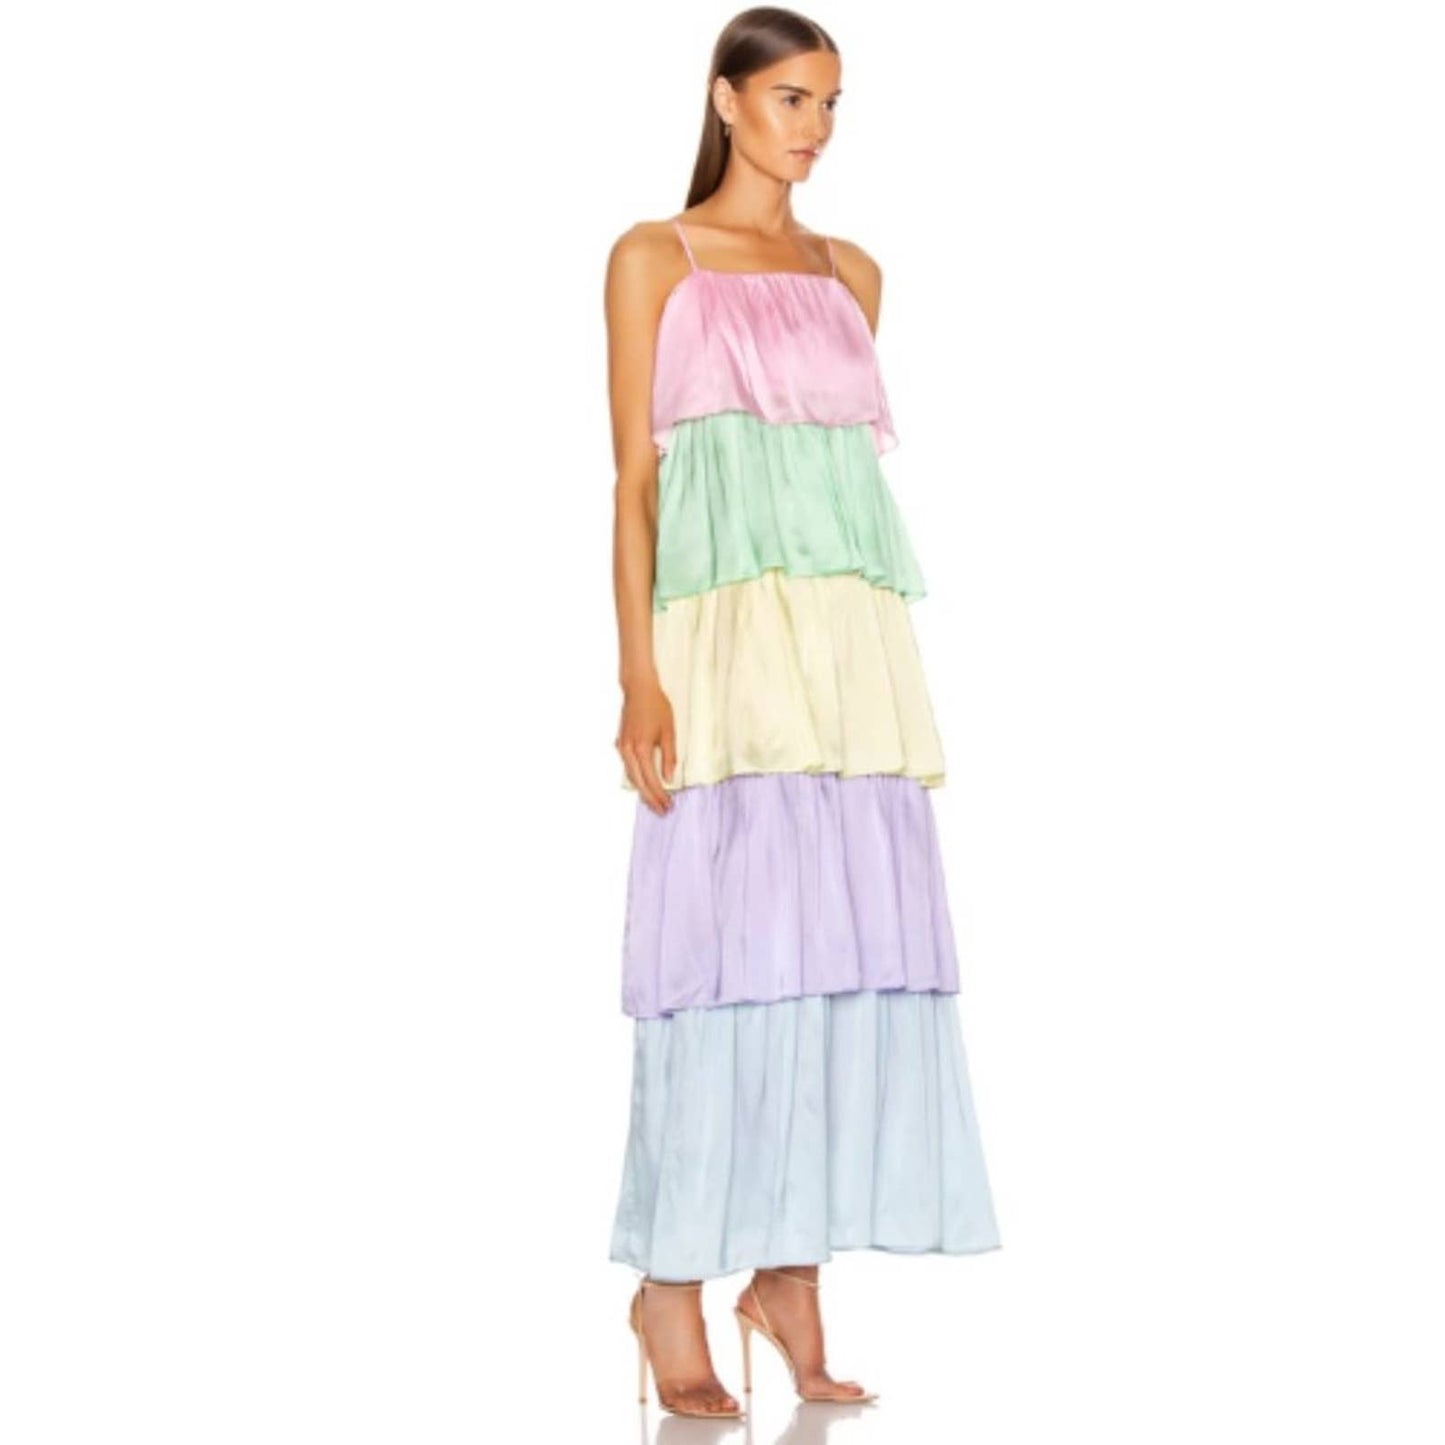 Olivia Rubin Cici Dress in Neapolitan Colorblock Size 2